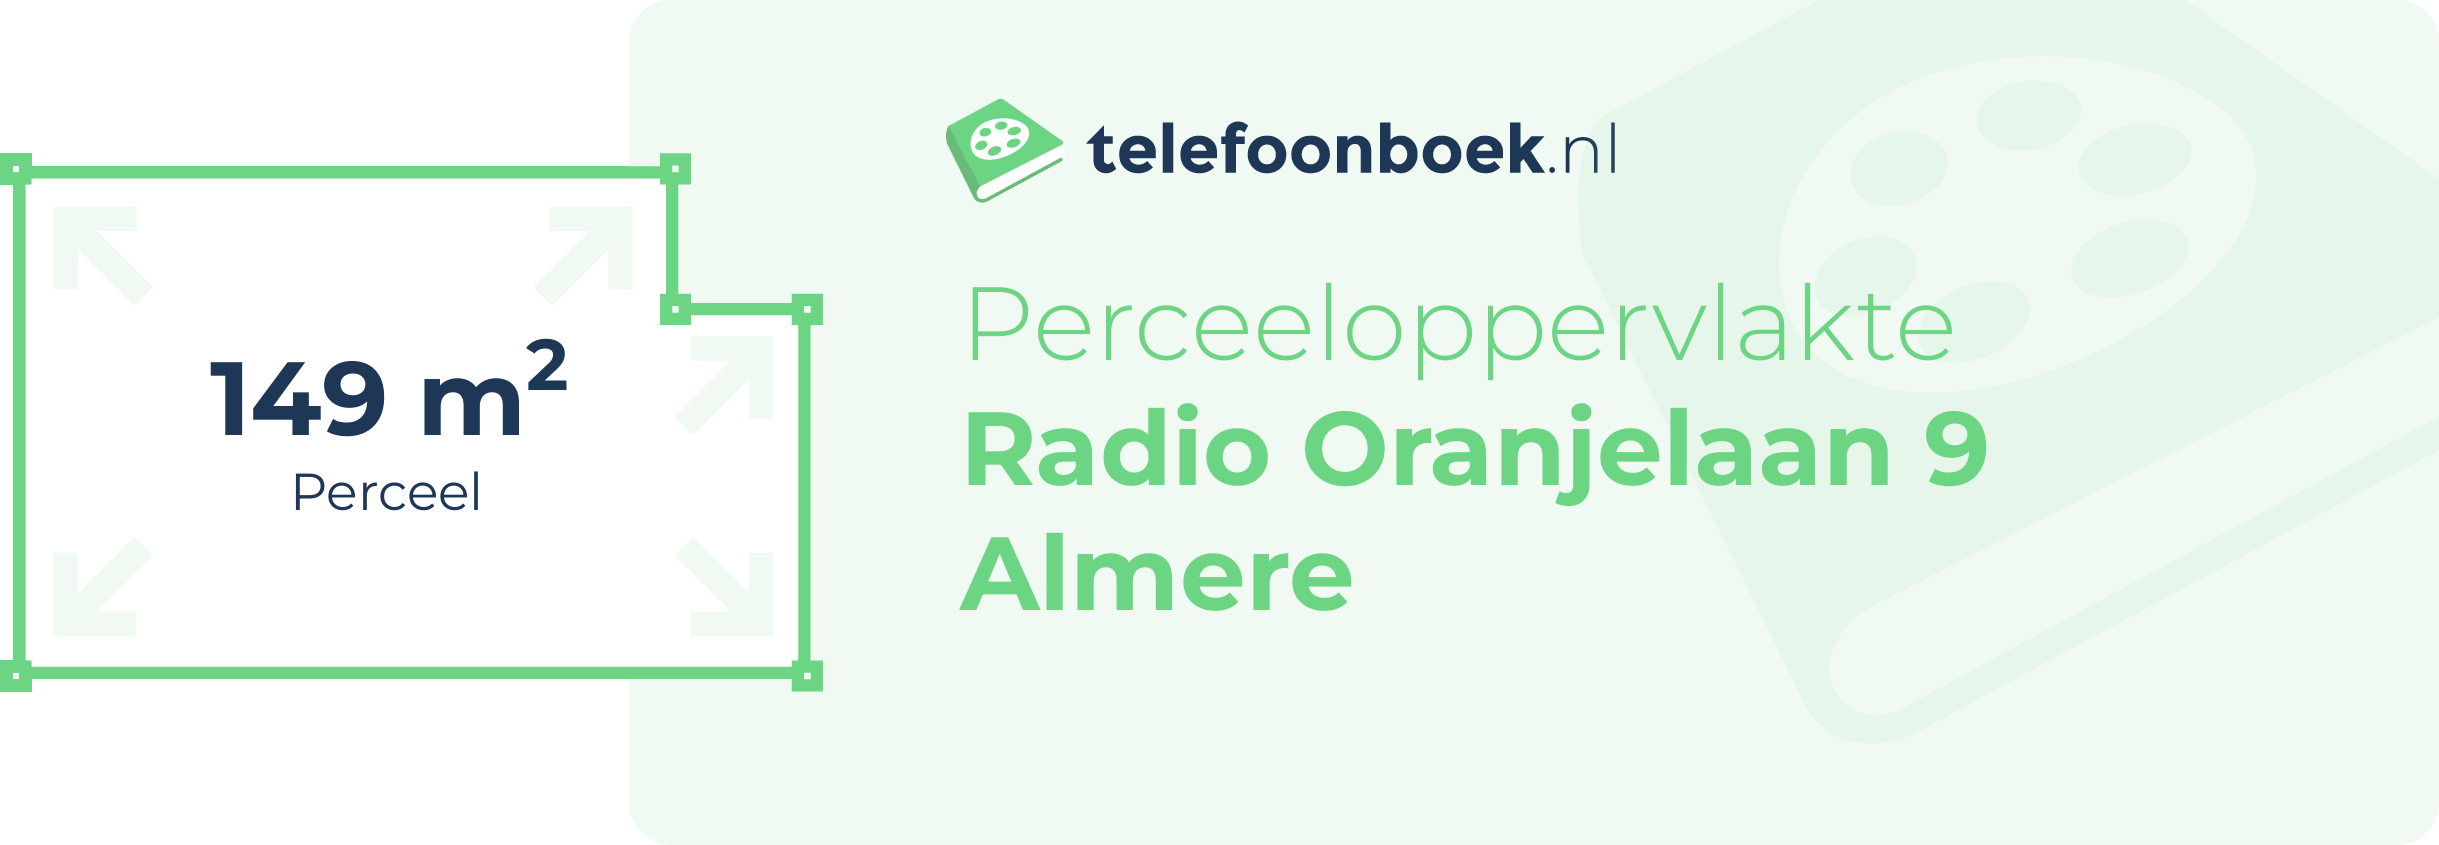 Perceeloppervlakte Radio Oranjelaan 9 Almere